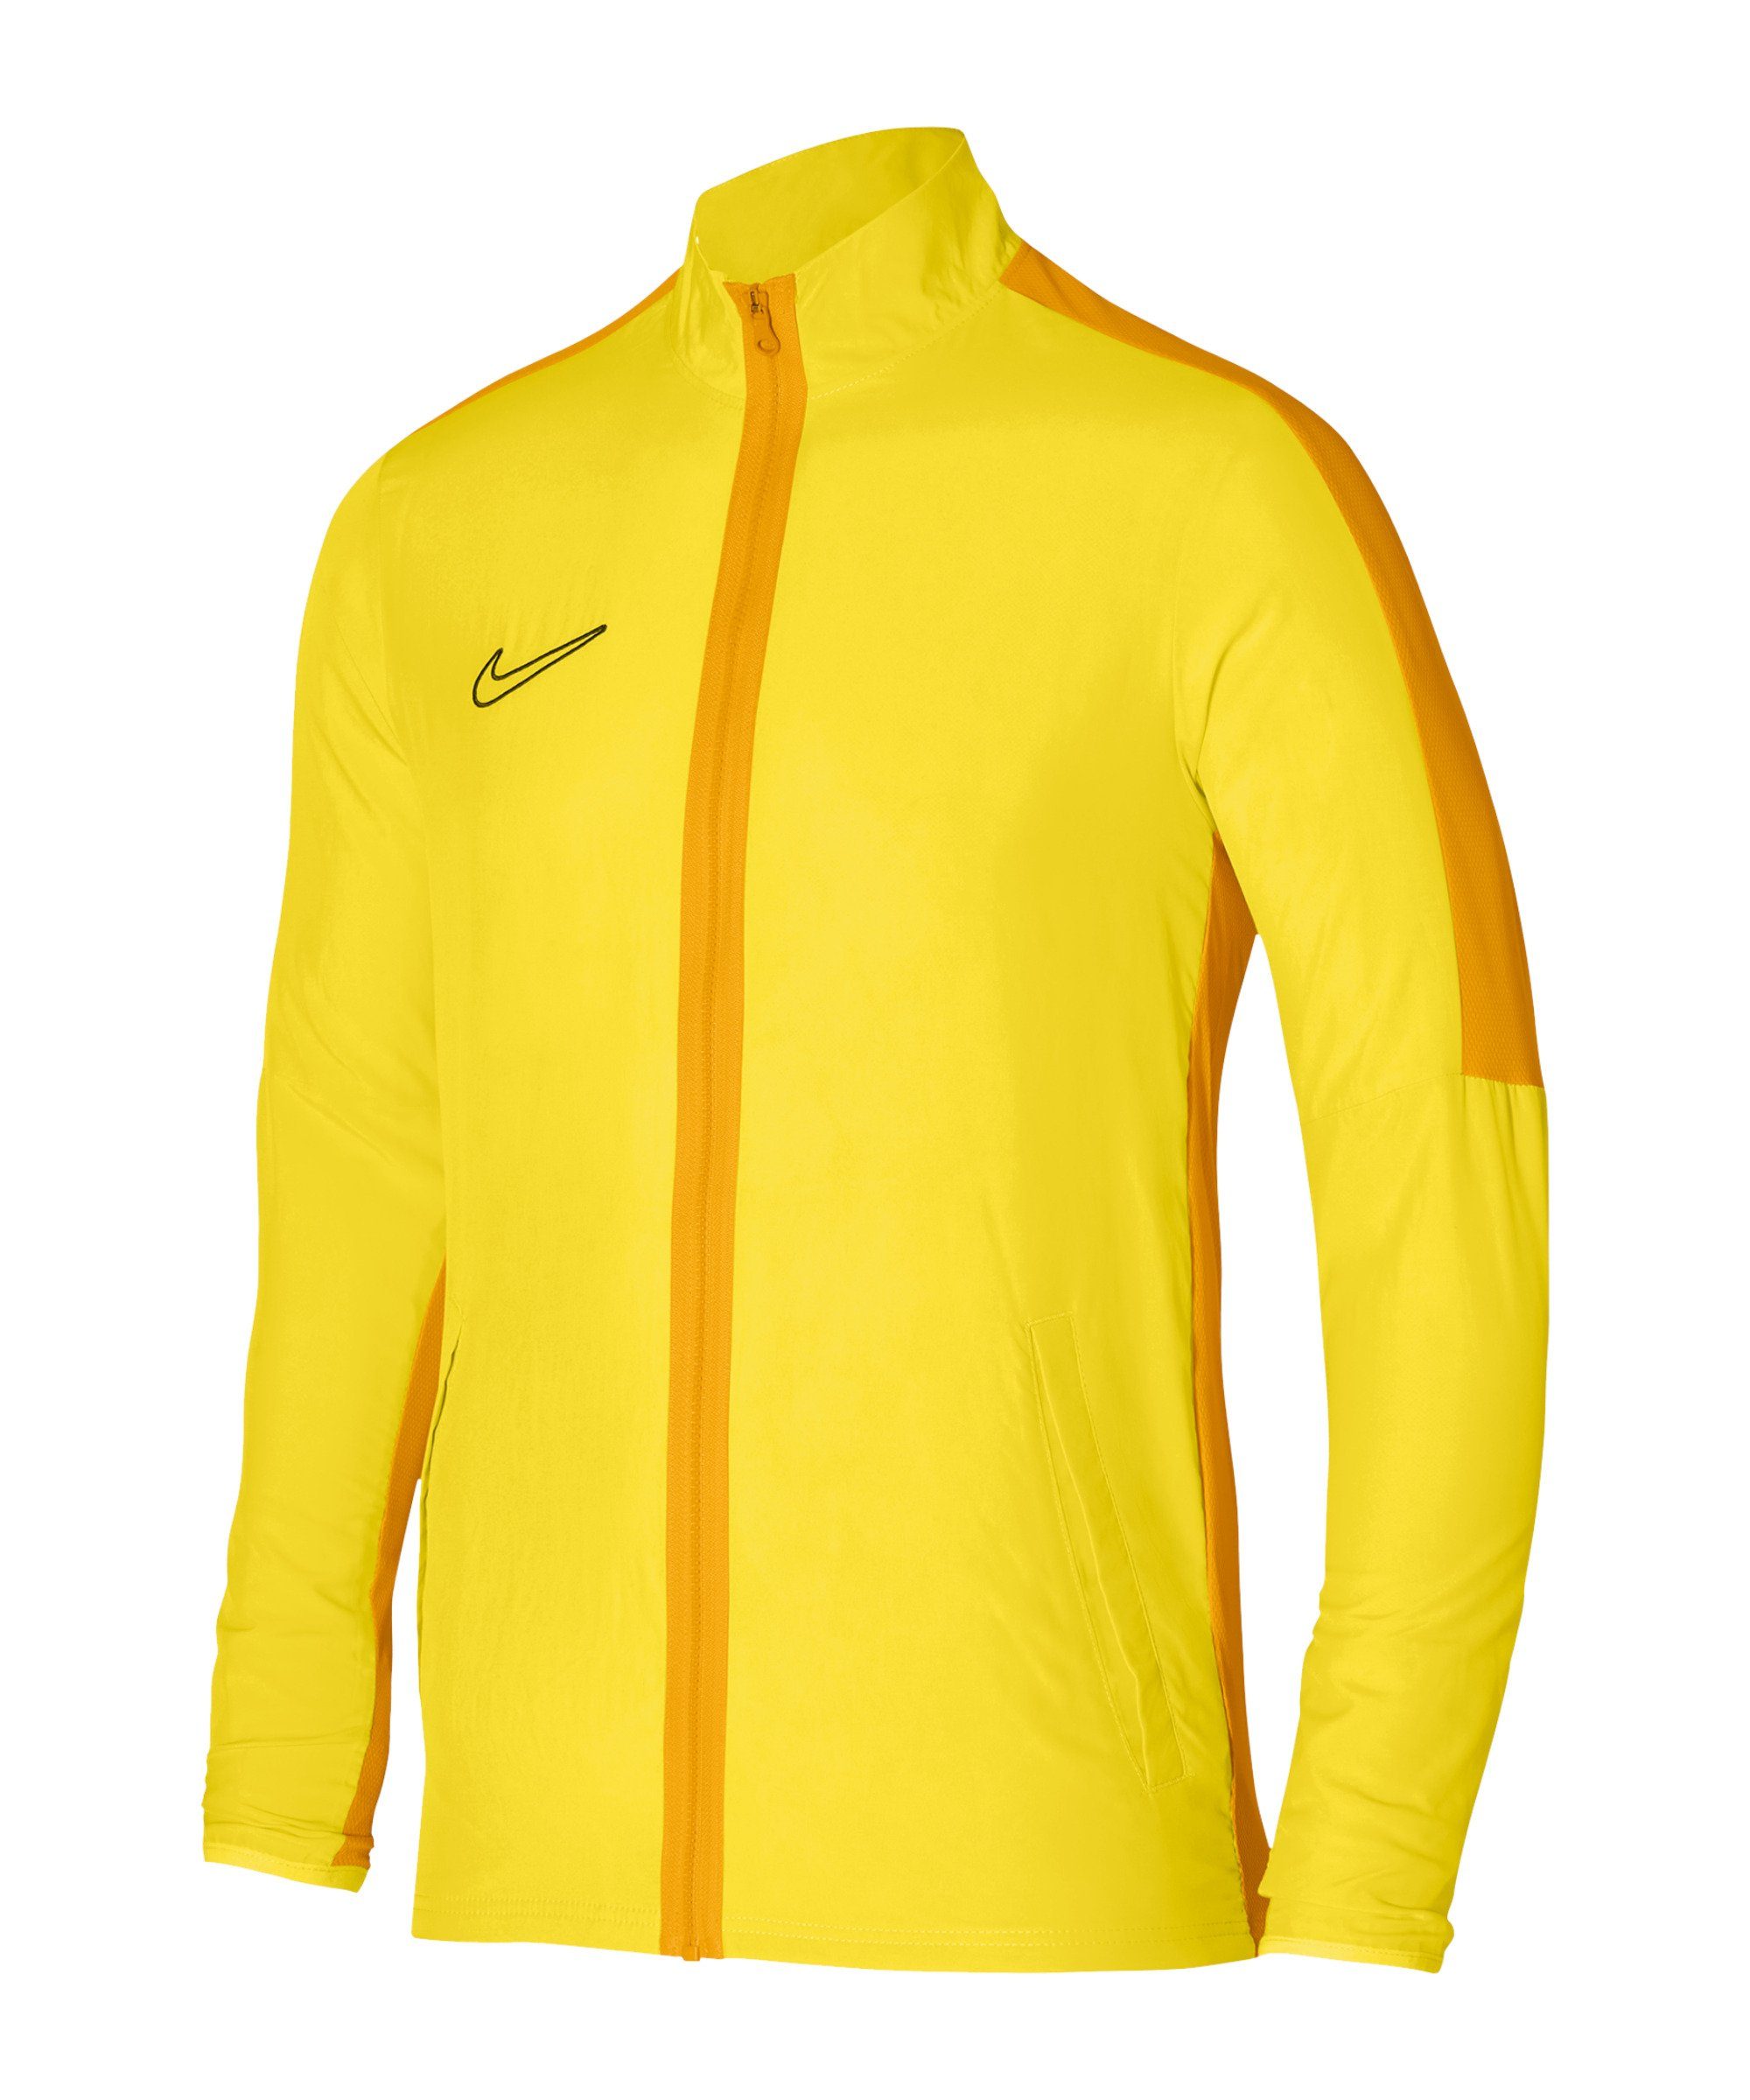 Trainingsjacke Nike Woven Academy gelbgoldschwarz Sweatjacke 23